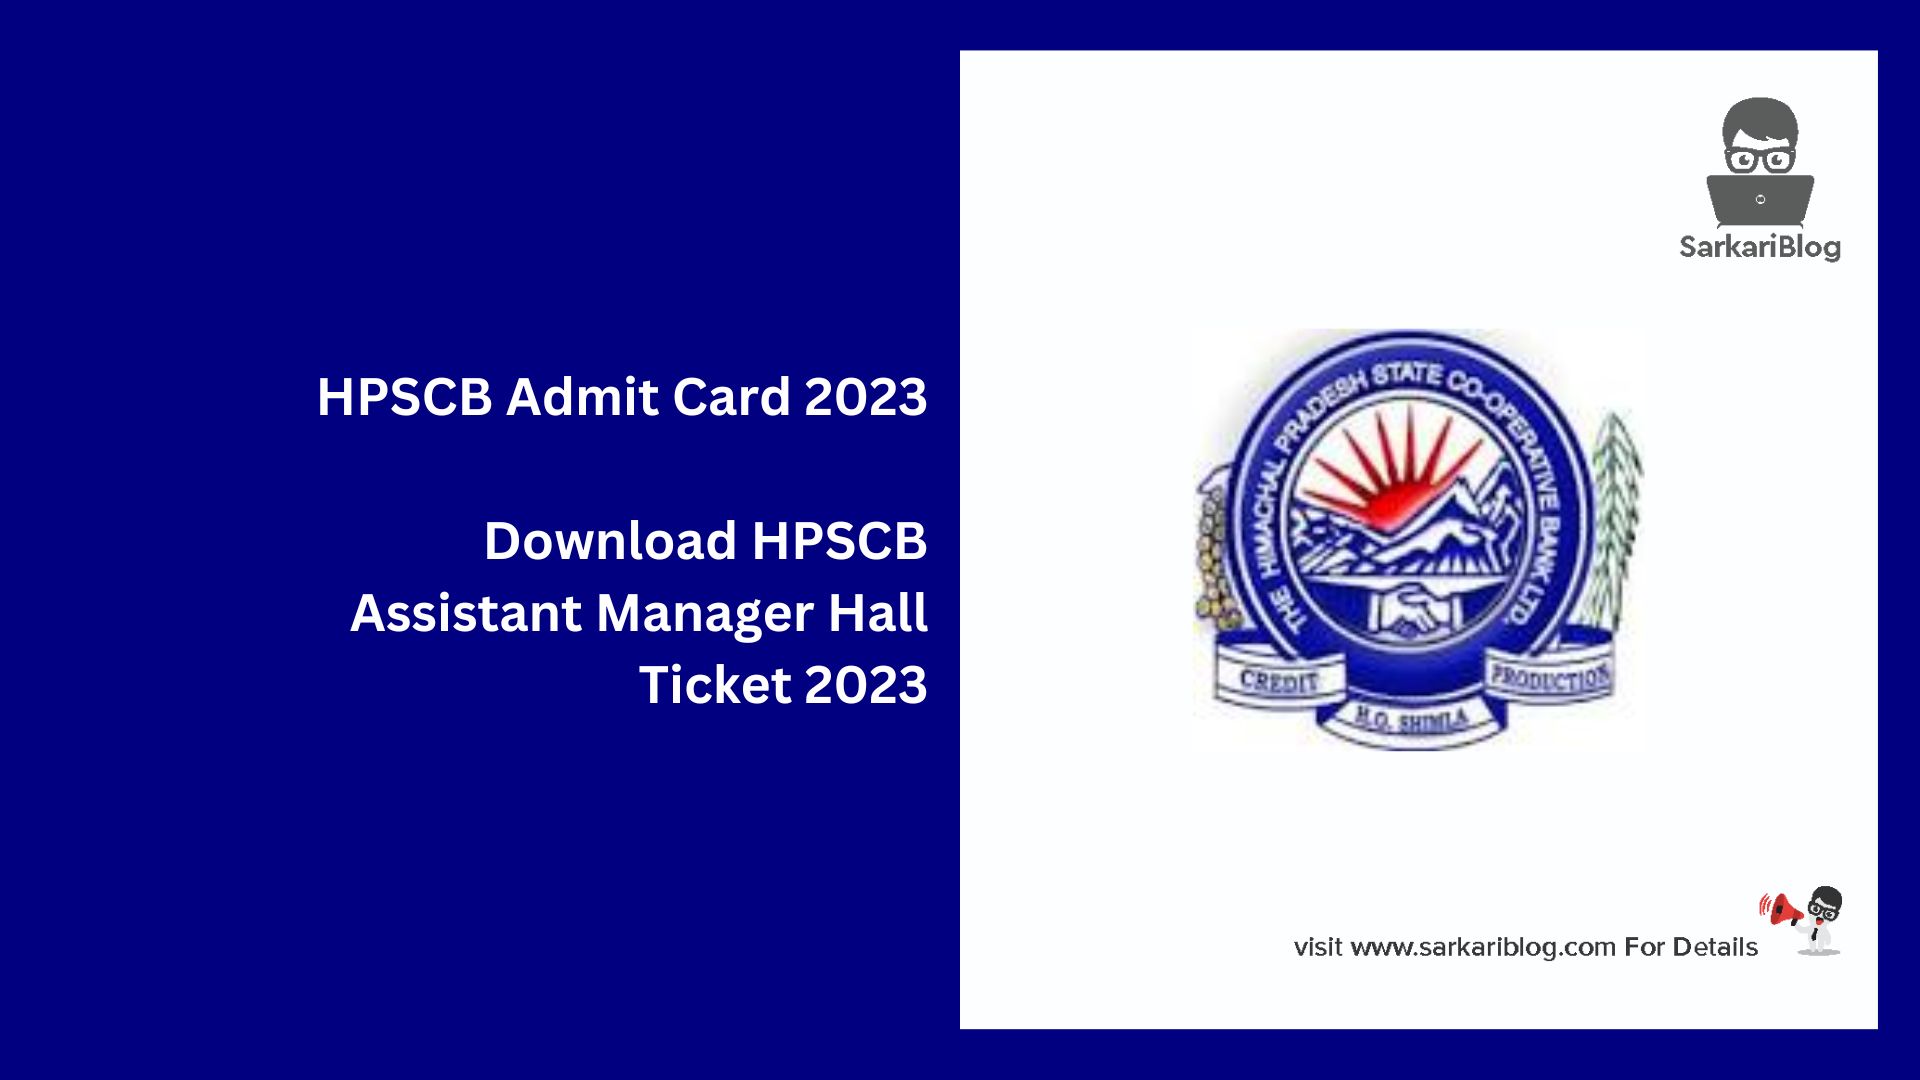 HPSCB Admit Card 2023